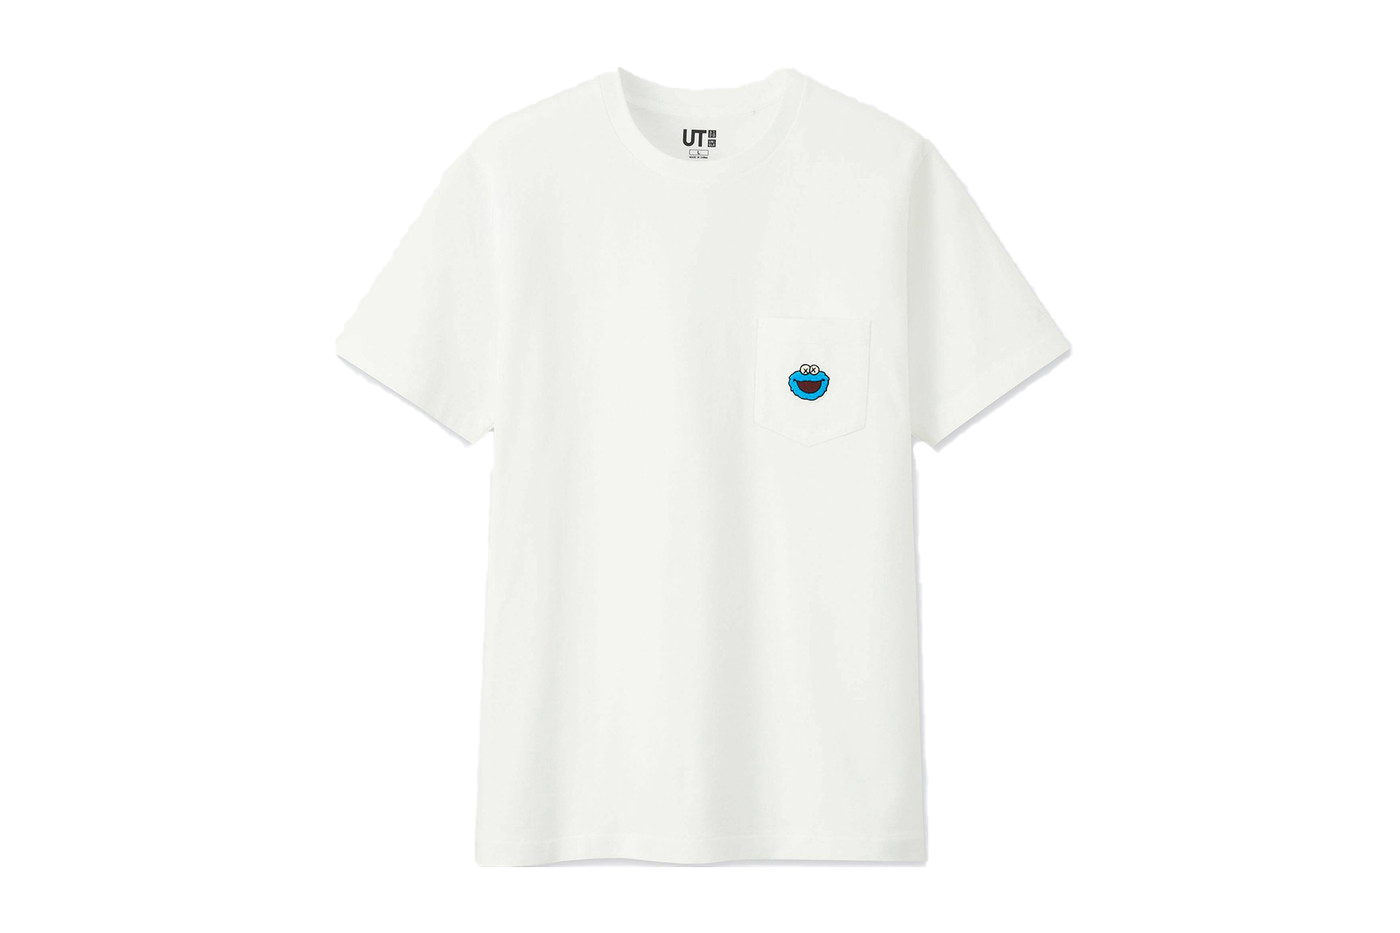 KAWS x Uniqlo x Sesame Street Group 2 2022 Shirt